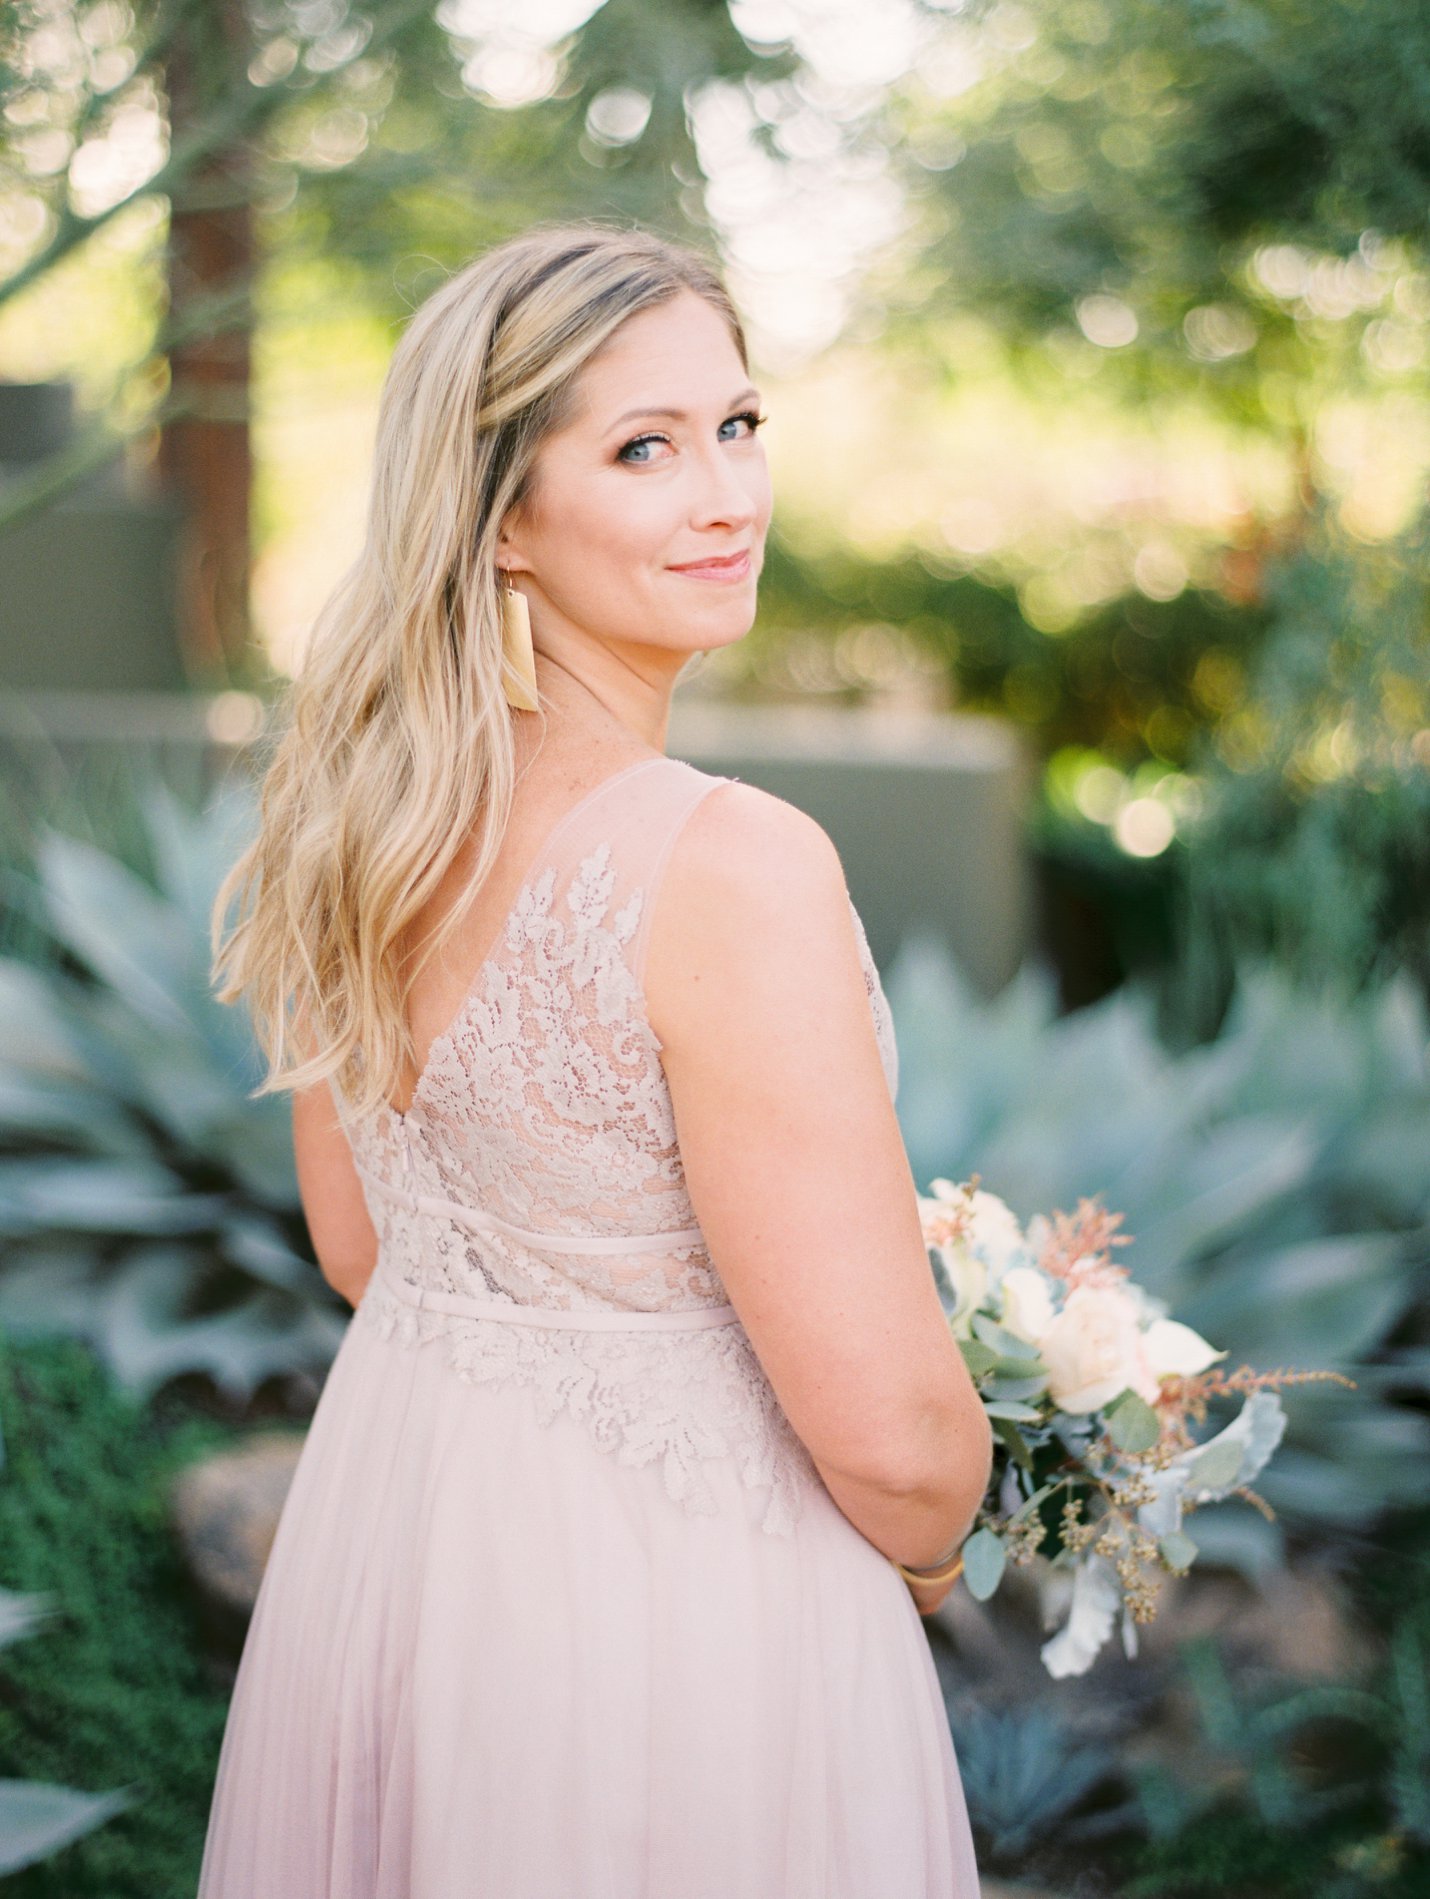 Desert Botanical Garden elopement - Scottsdale Wedding Photographer - Rachel Solomon Photography